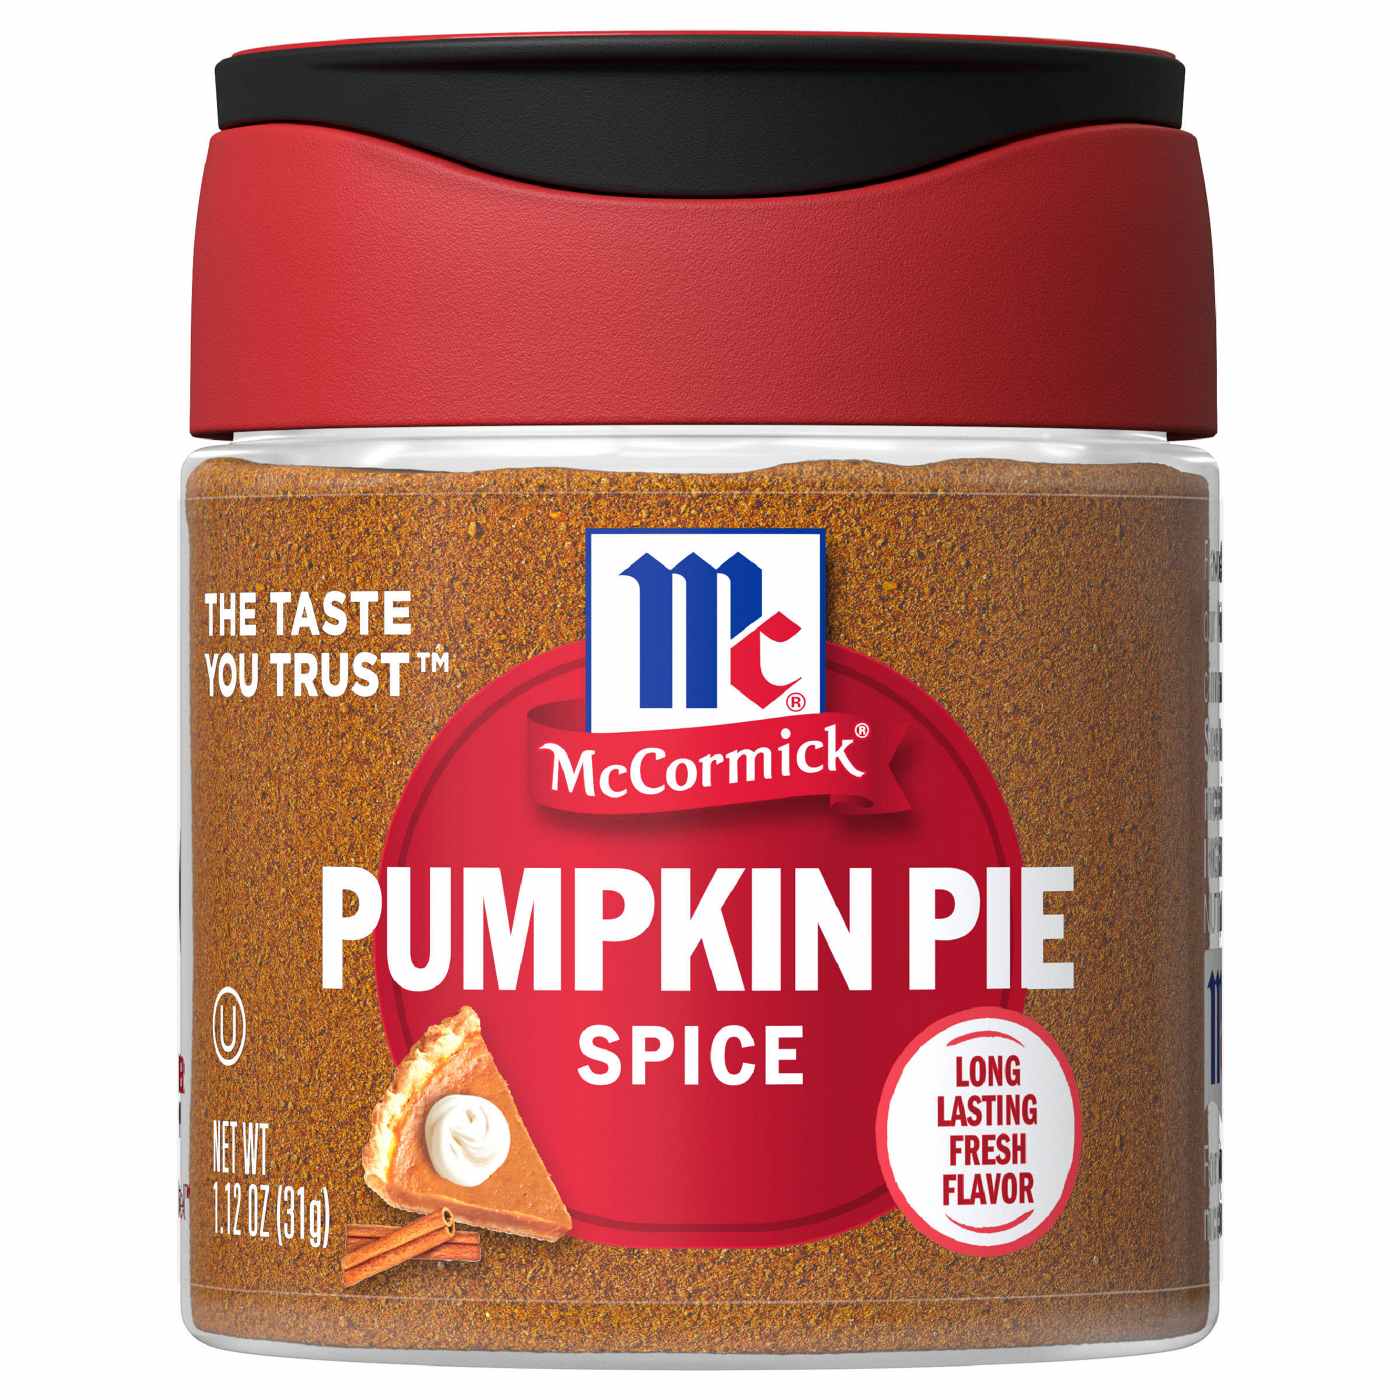 McCormick Pumpkin Pie Spice; image 1 of 4